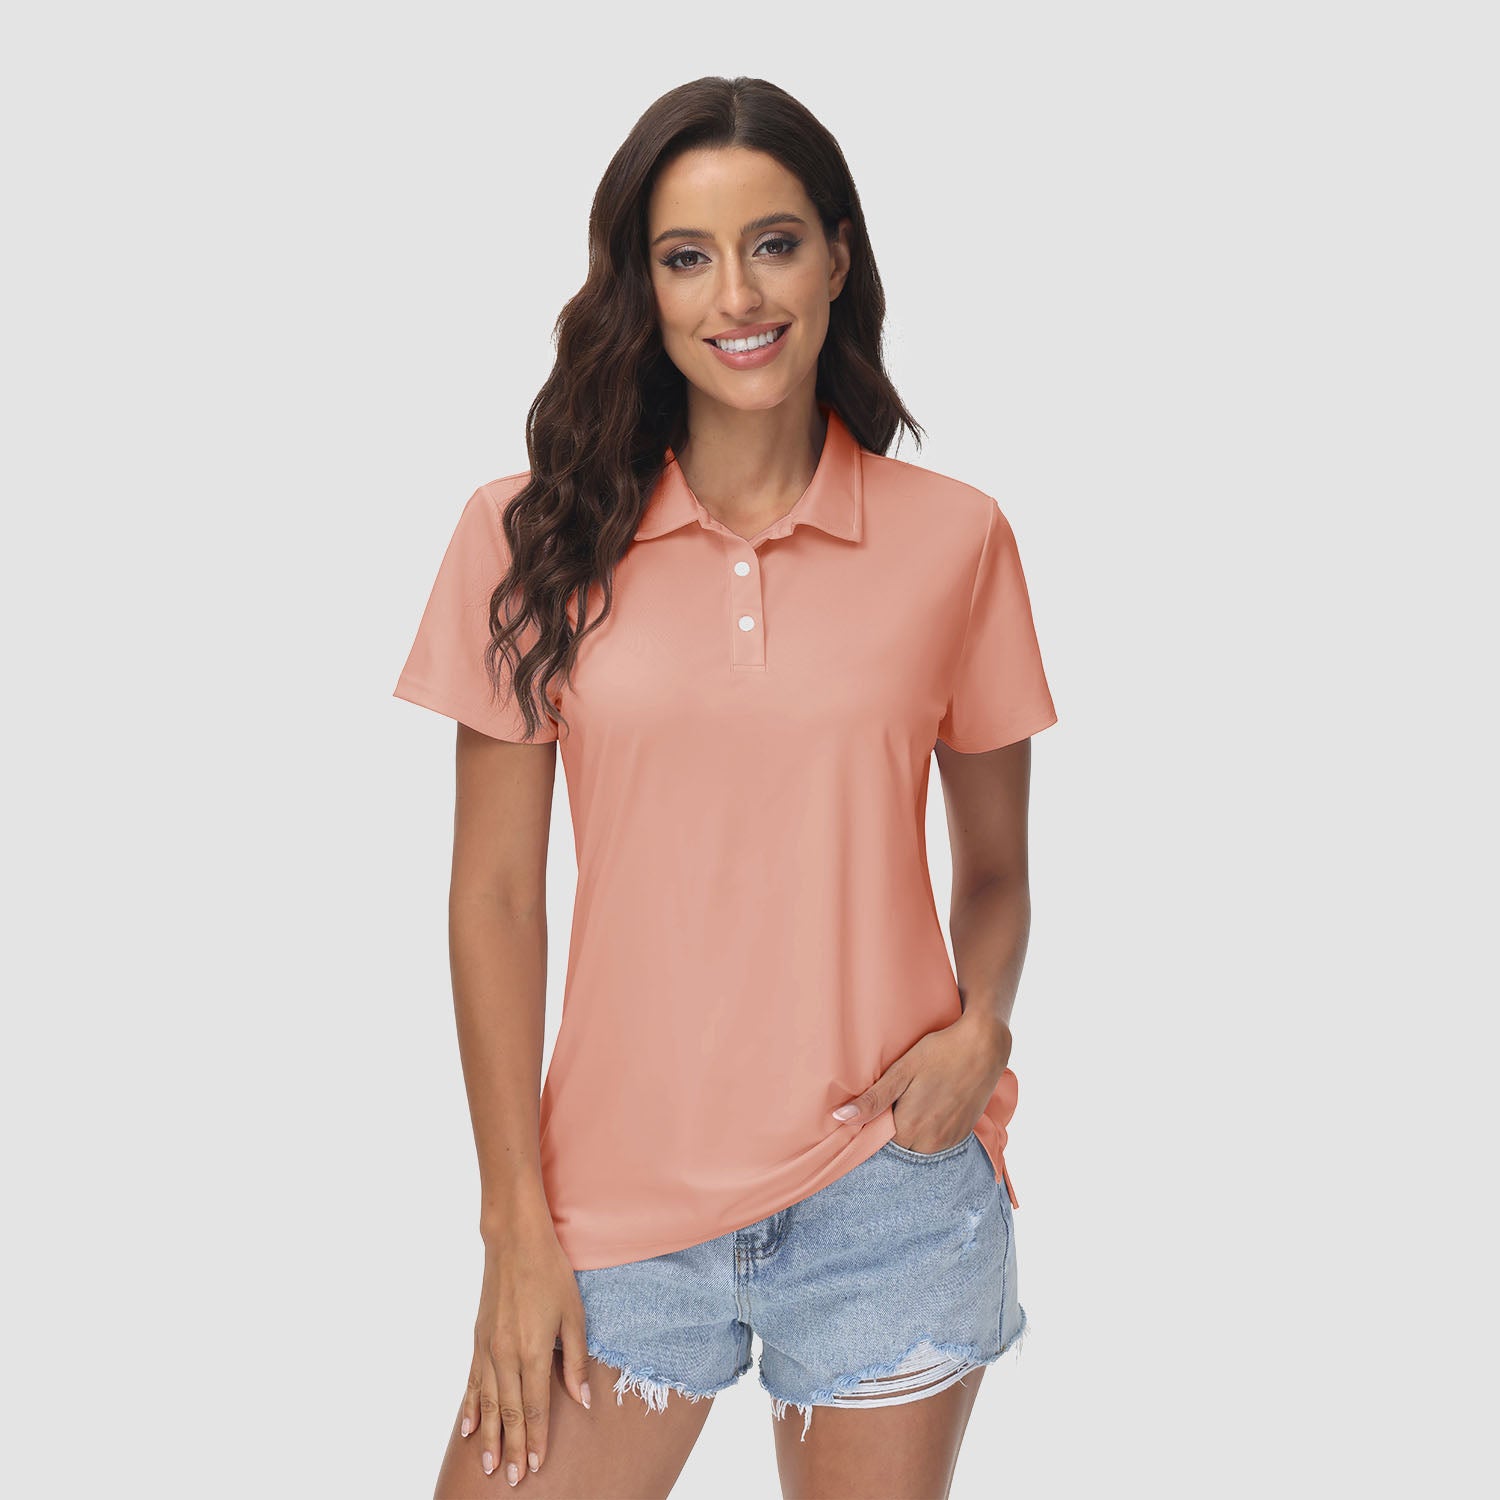 Women's Polo Shirts UPF 50+ Sun Protection Short Sleeve Golf Shirt Quick Dry